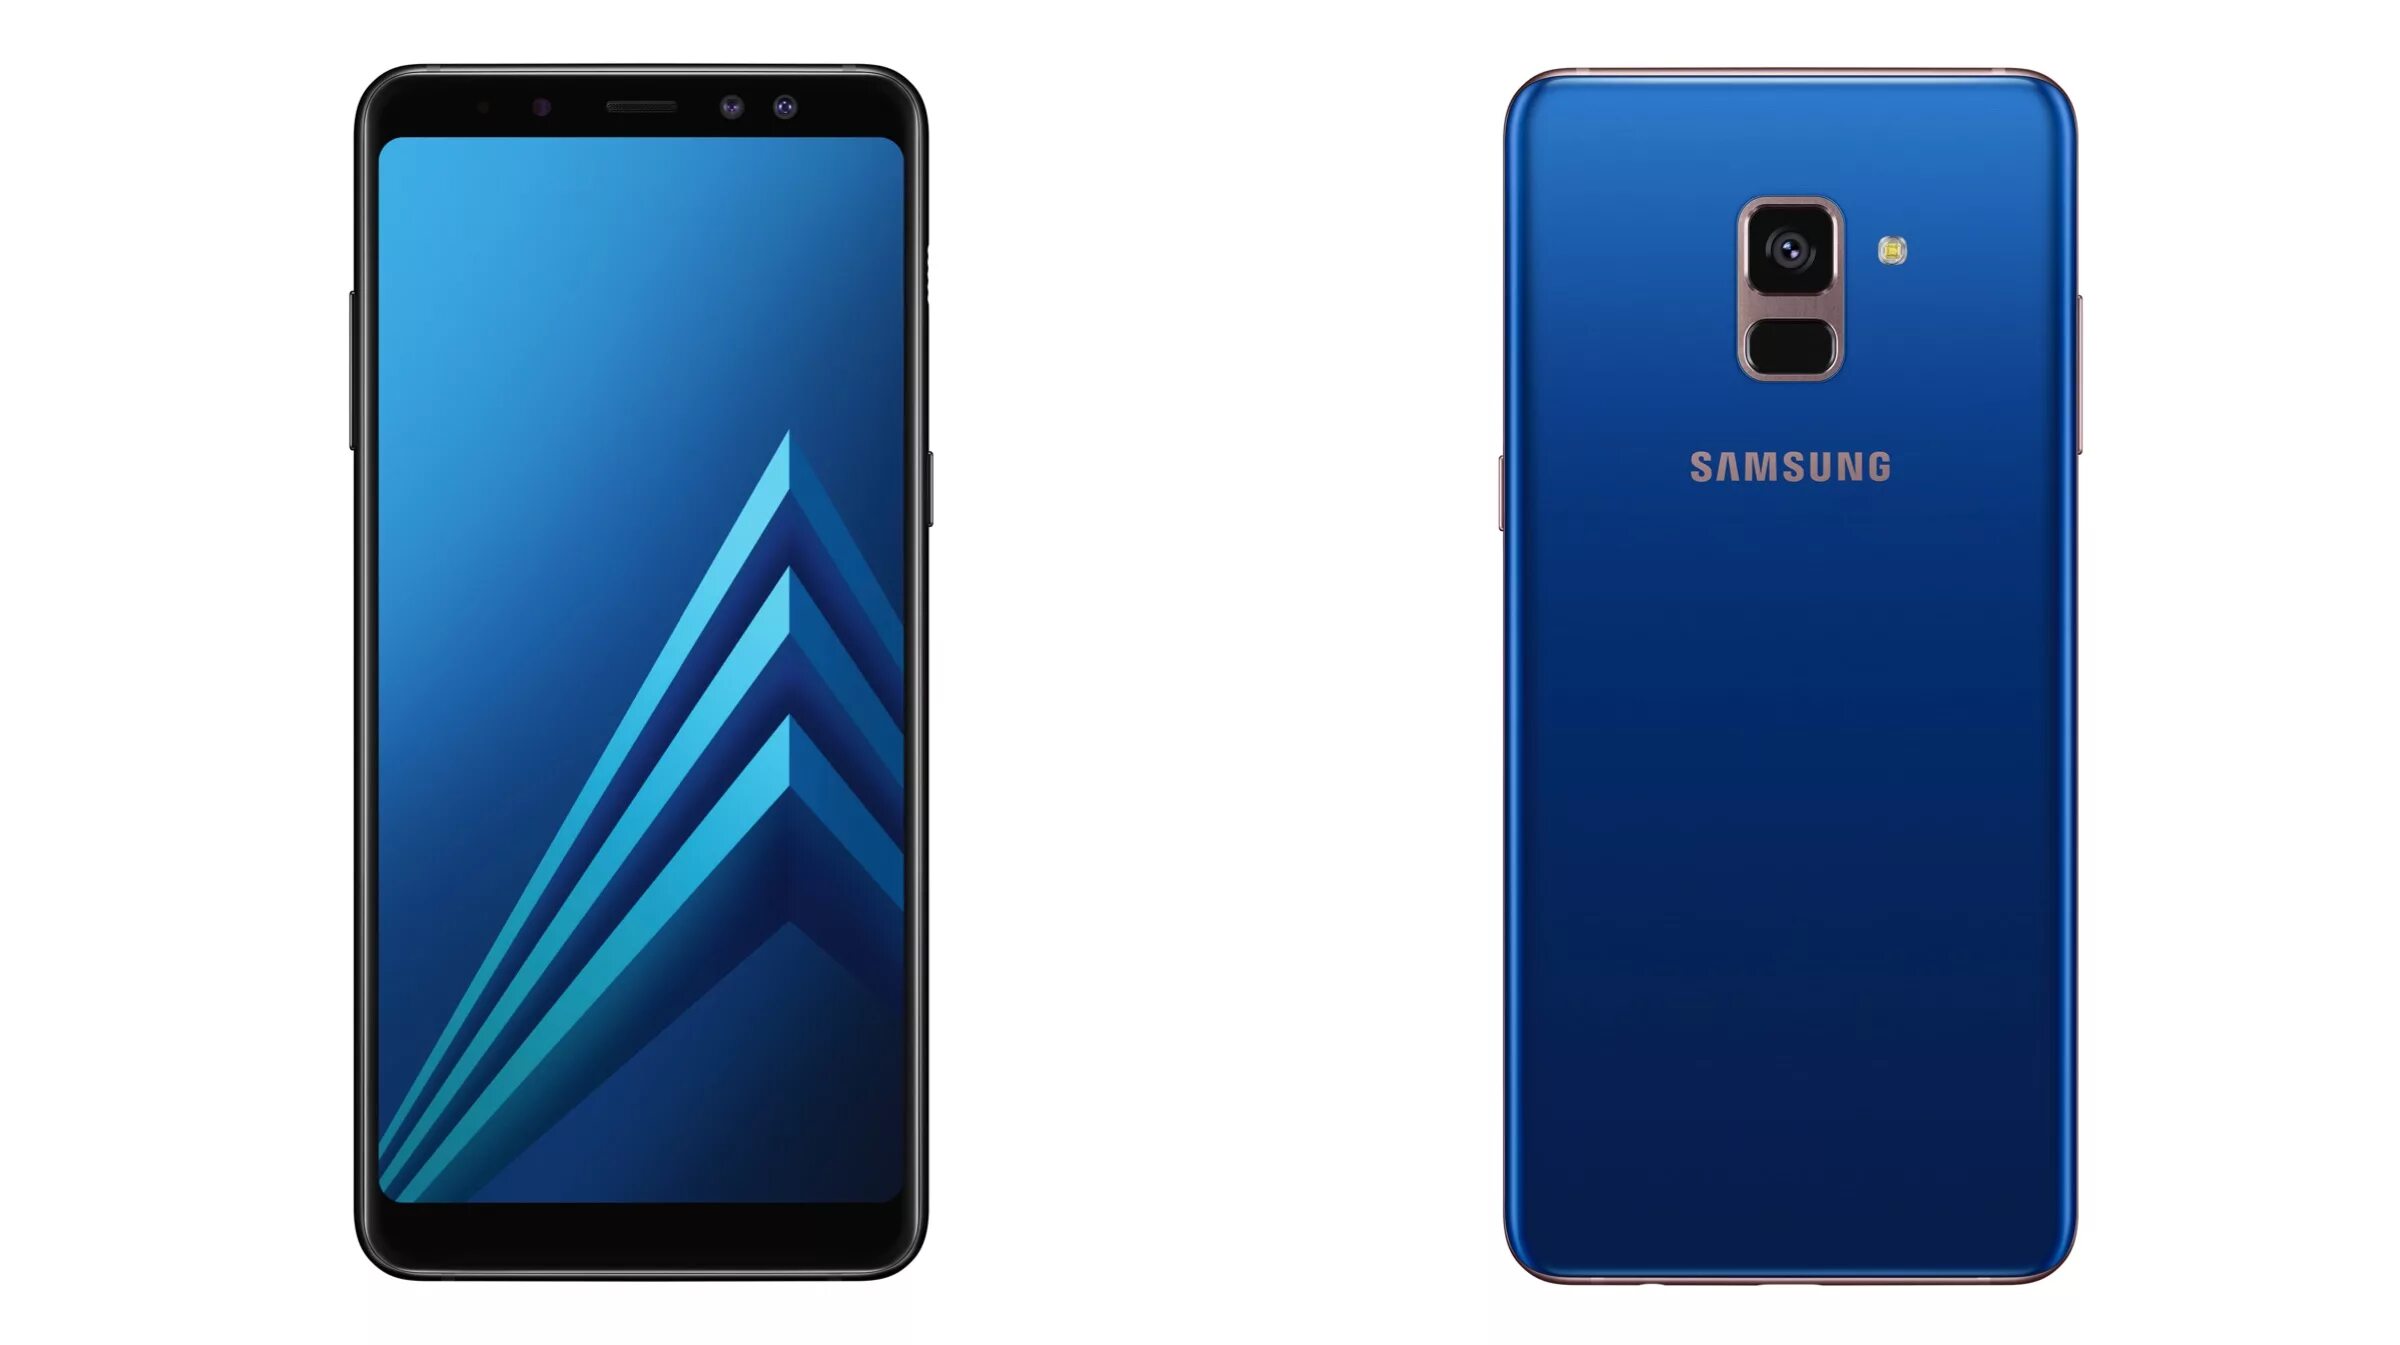 Телефоны самсунг 2018 года. Samsung Galaxy a8 2018. Samsung Galaxy a8 a8+. Samsung Galaxy a8 Plus. Samsung Galaxy a8+ SM-a730f/DS.